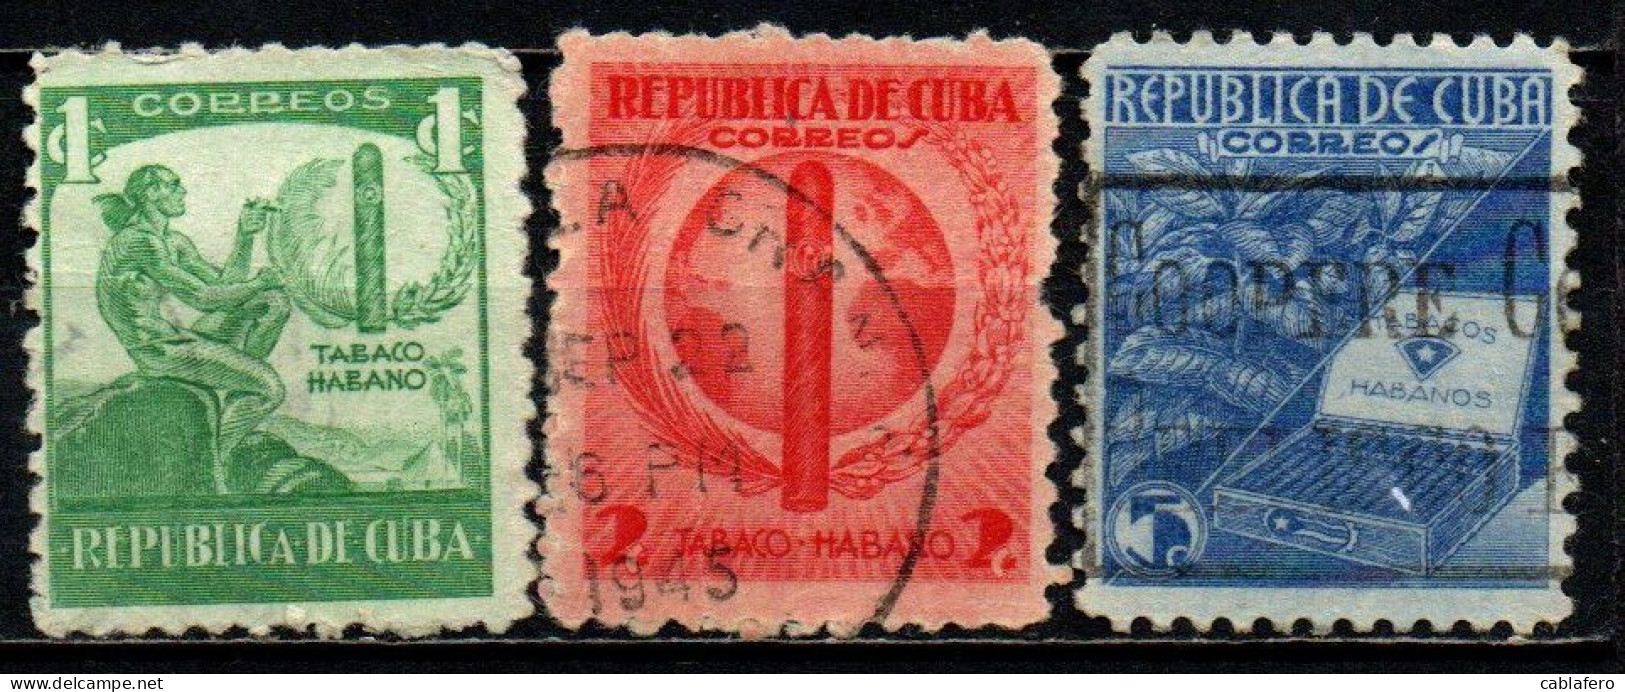 CUBA - 1939 - INDIANO D'AMERICA, SIGARO CUBANO, PIANTA DI TABACCO E SIGARI CUBANI - USATI - Oblitérés